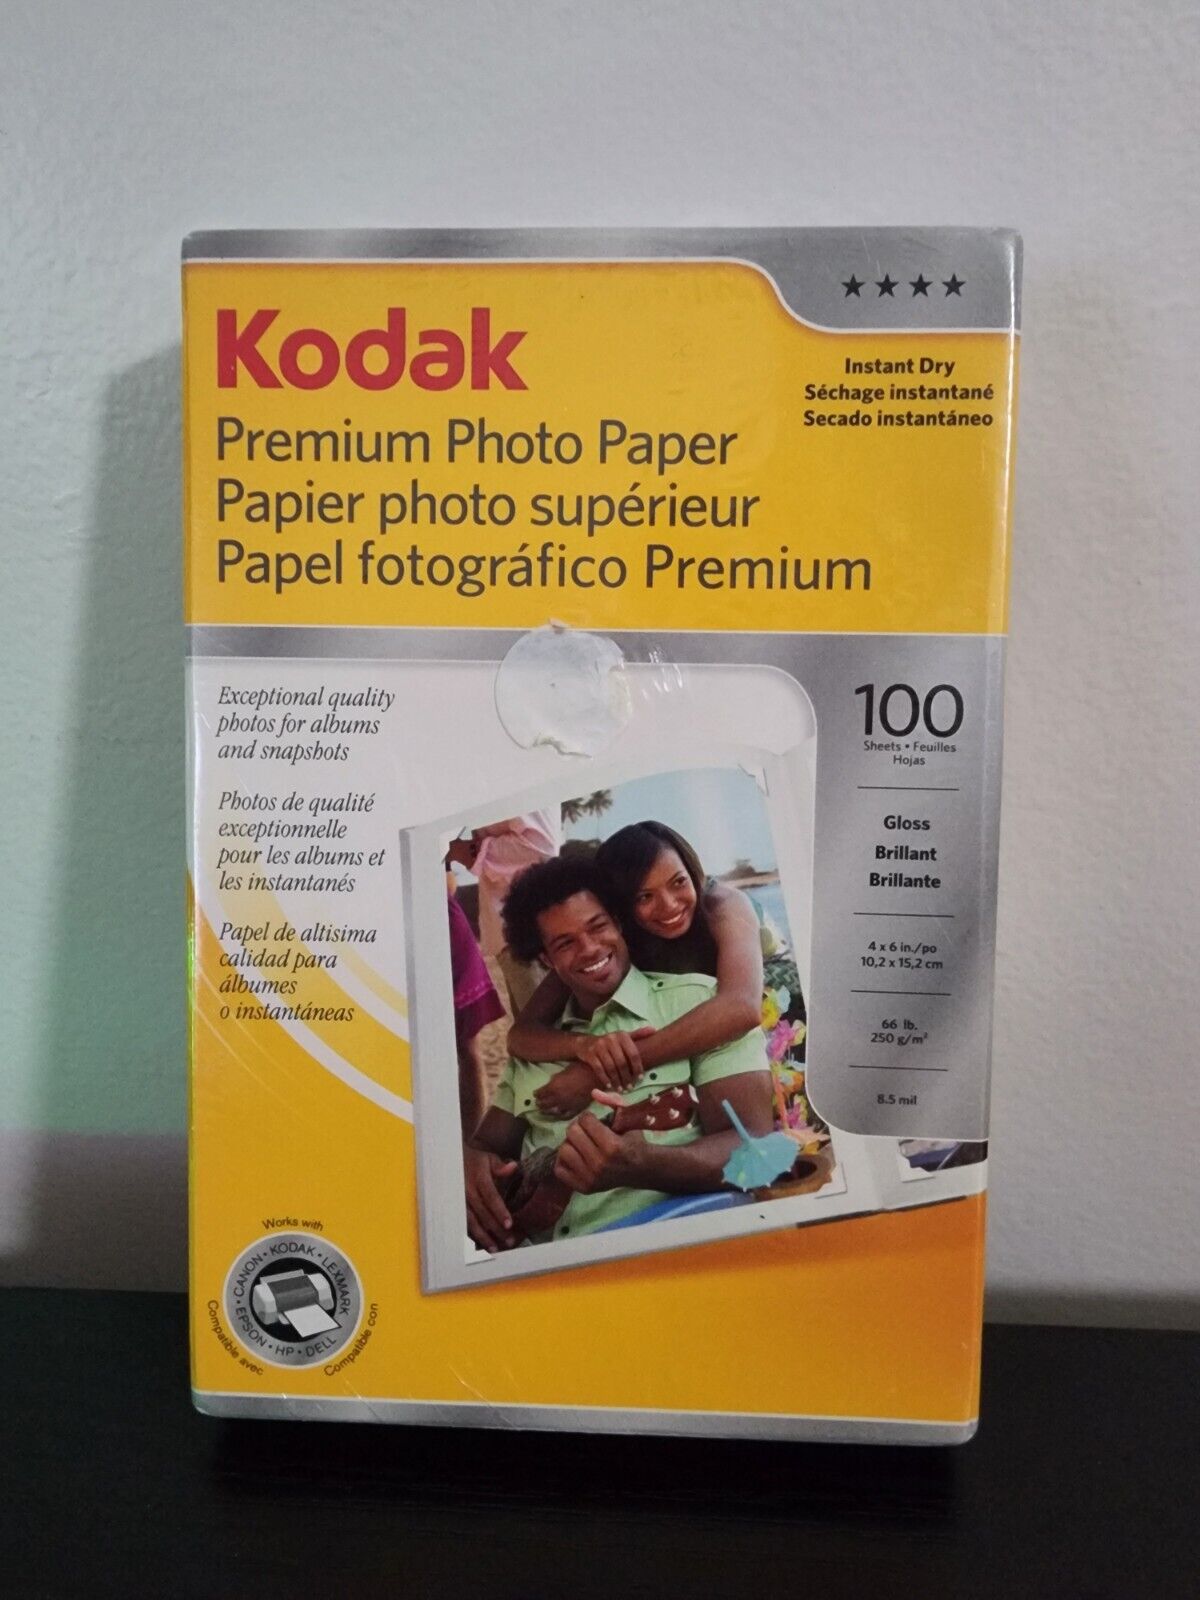 Kodak Premium Photo Paper Gloss 100 Sheets, Instant Dry, 4x6 In, 8.5 Mil (New)